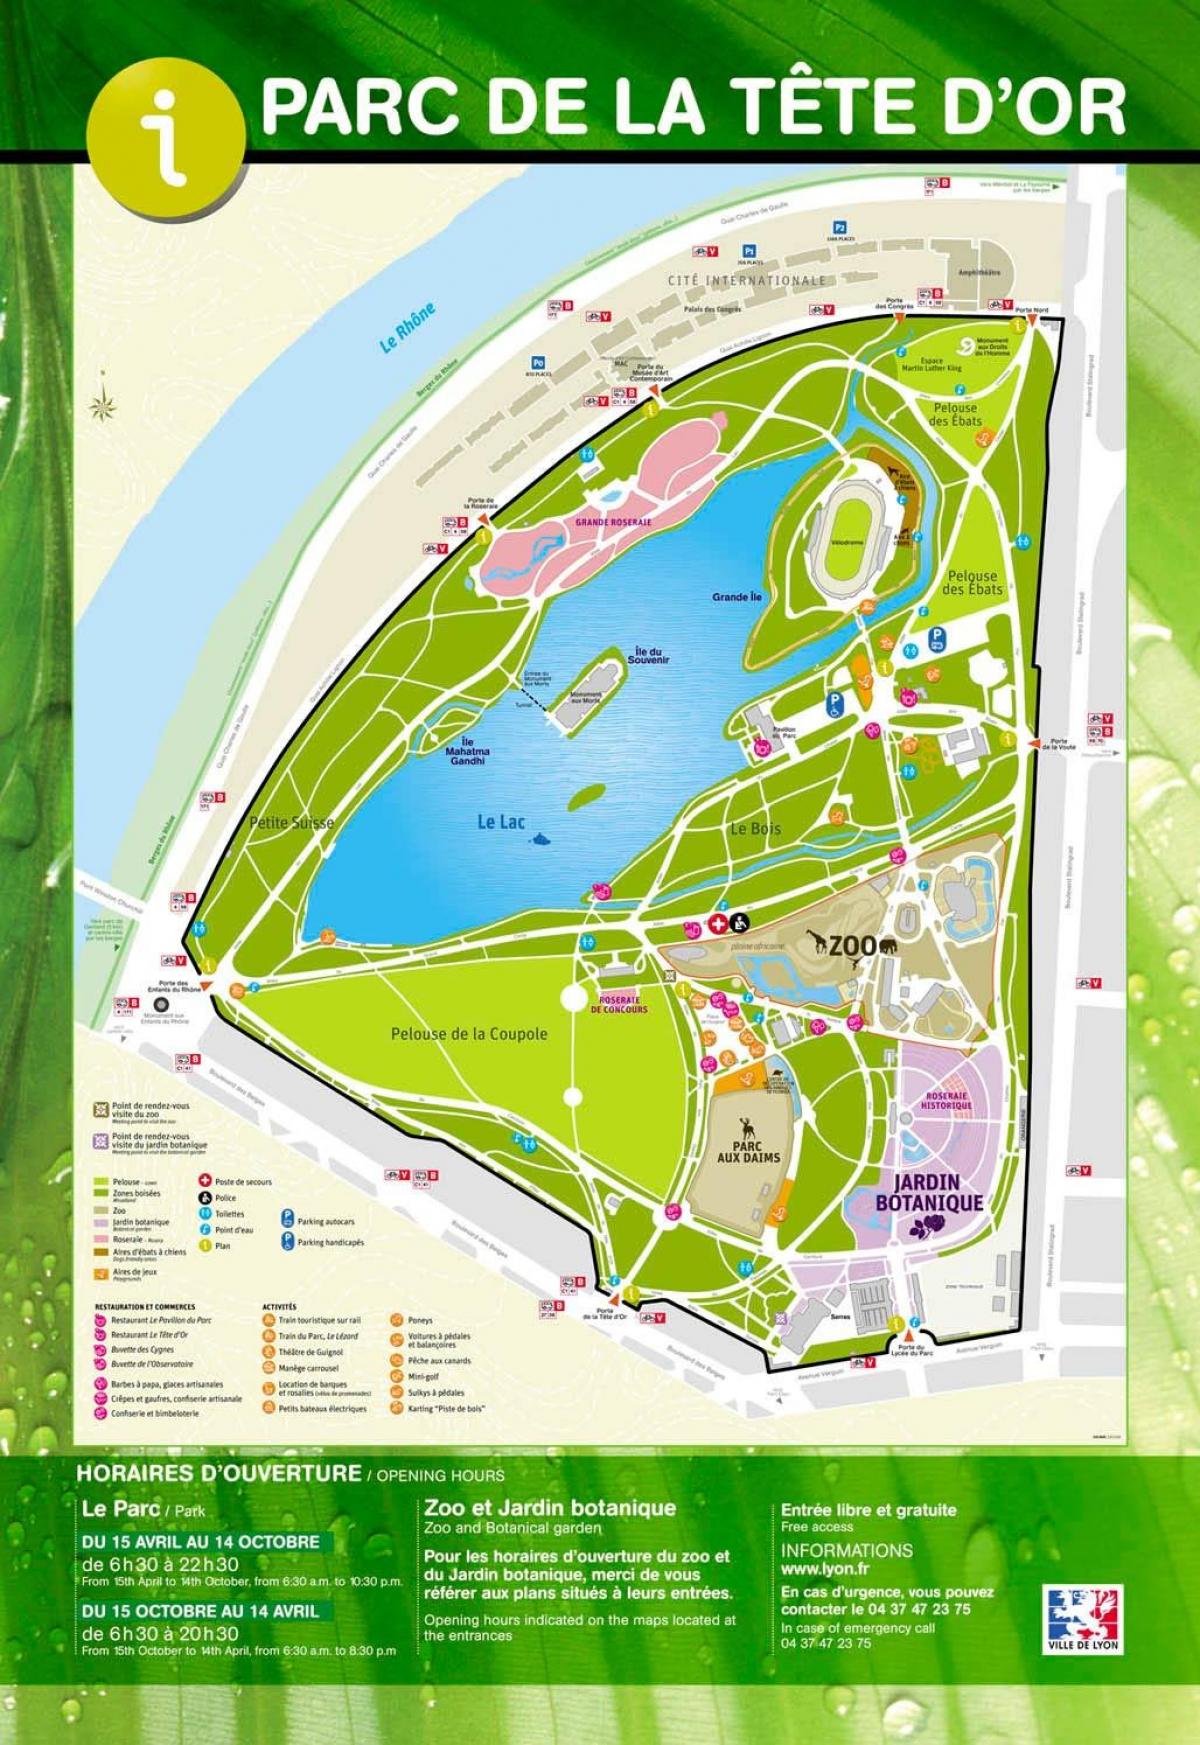 kort over Lyon park